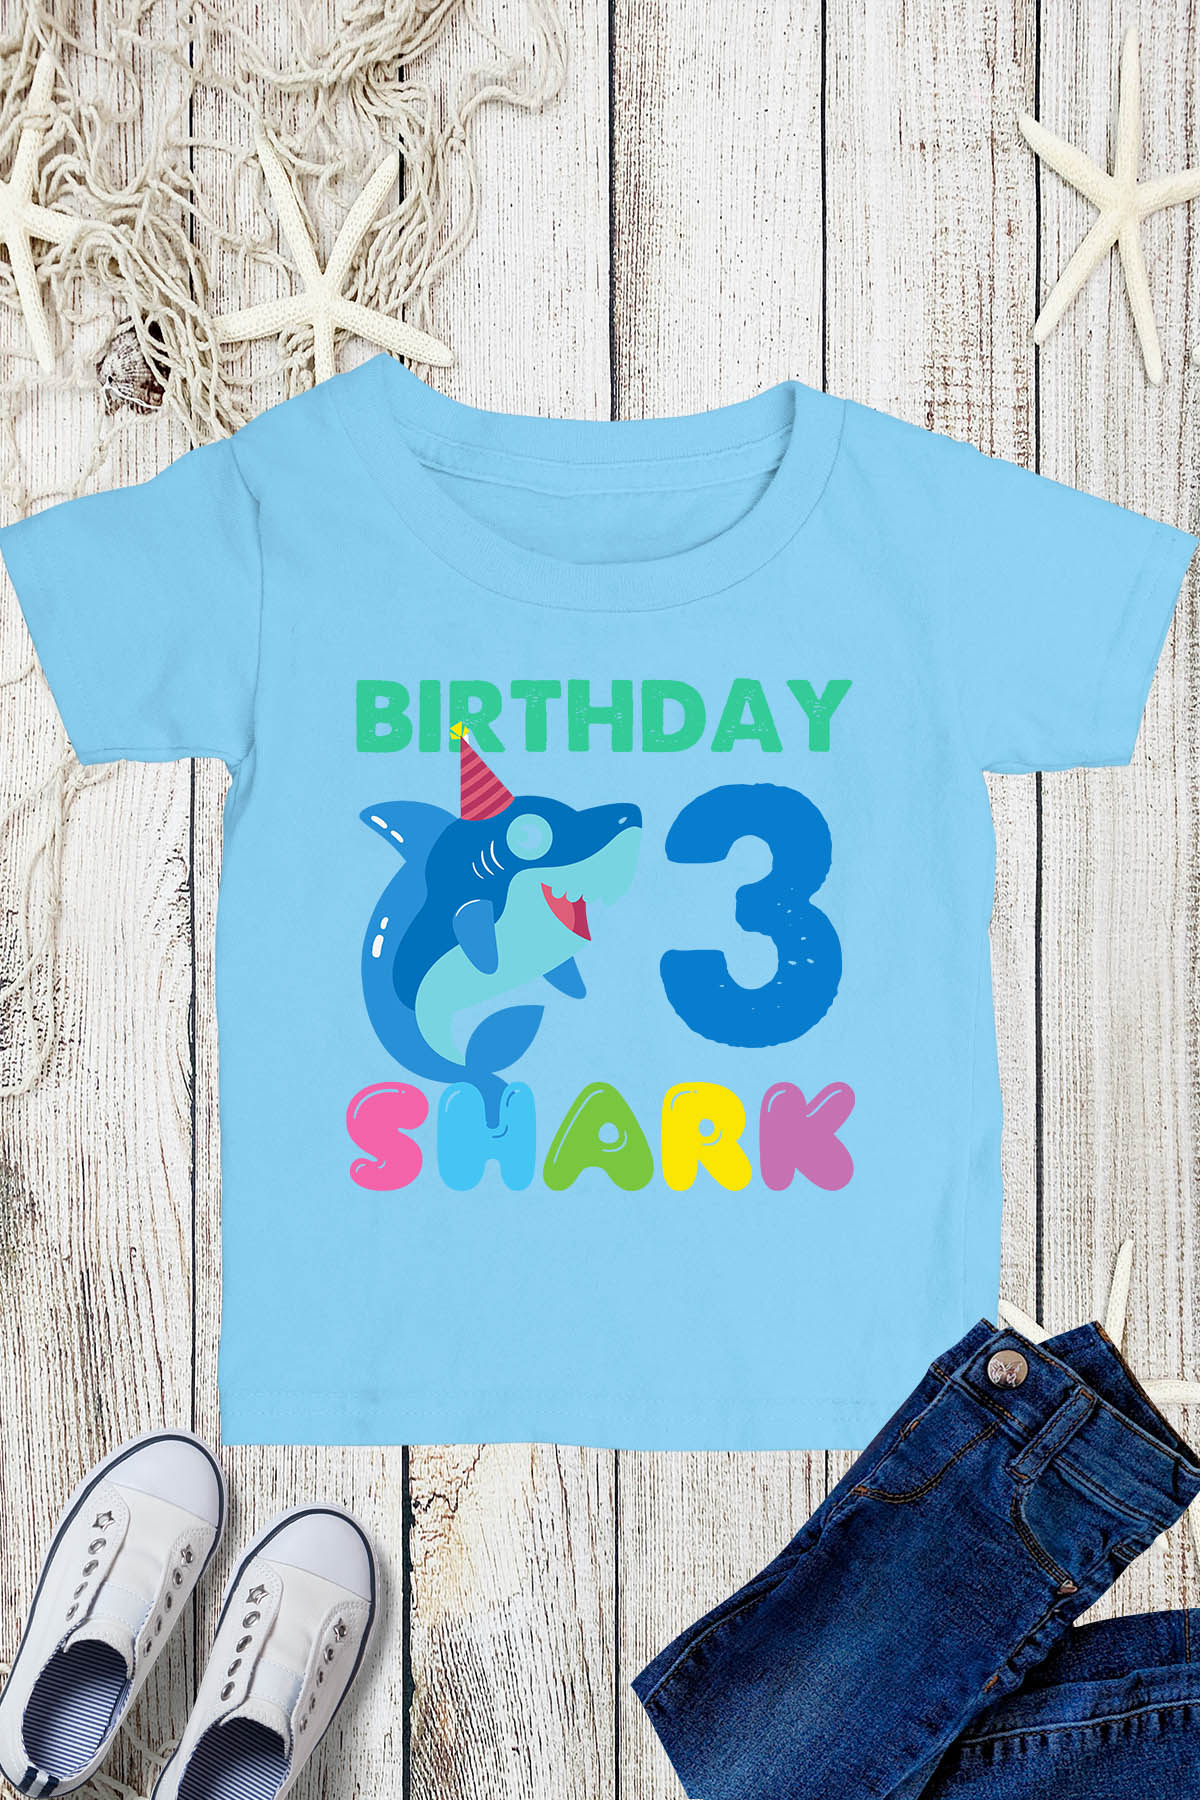 3rd Birthday Shark T Shirt